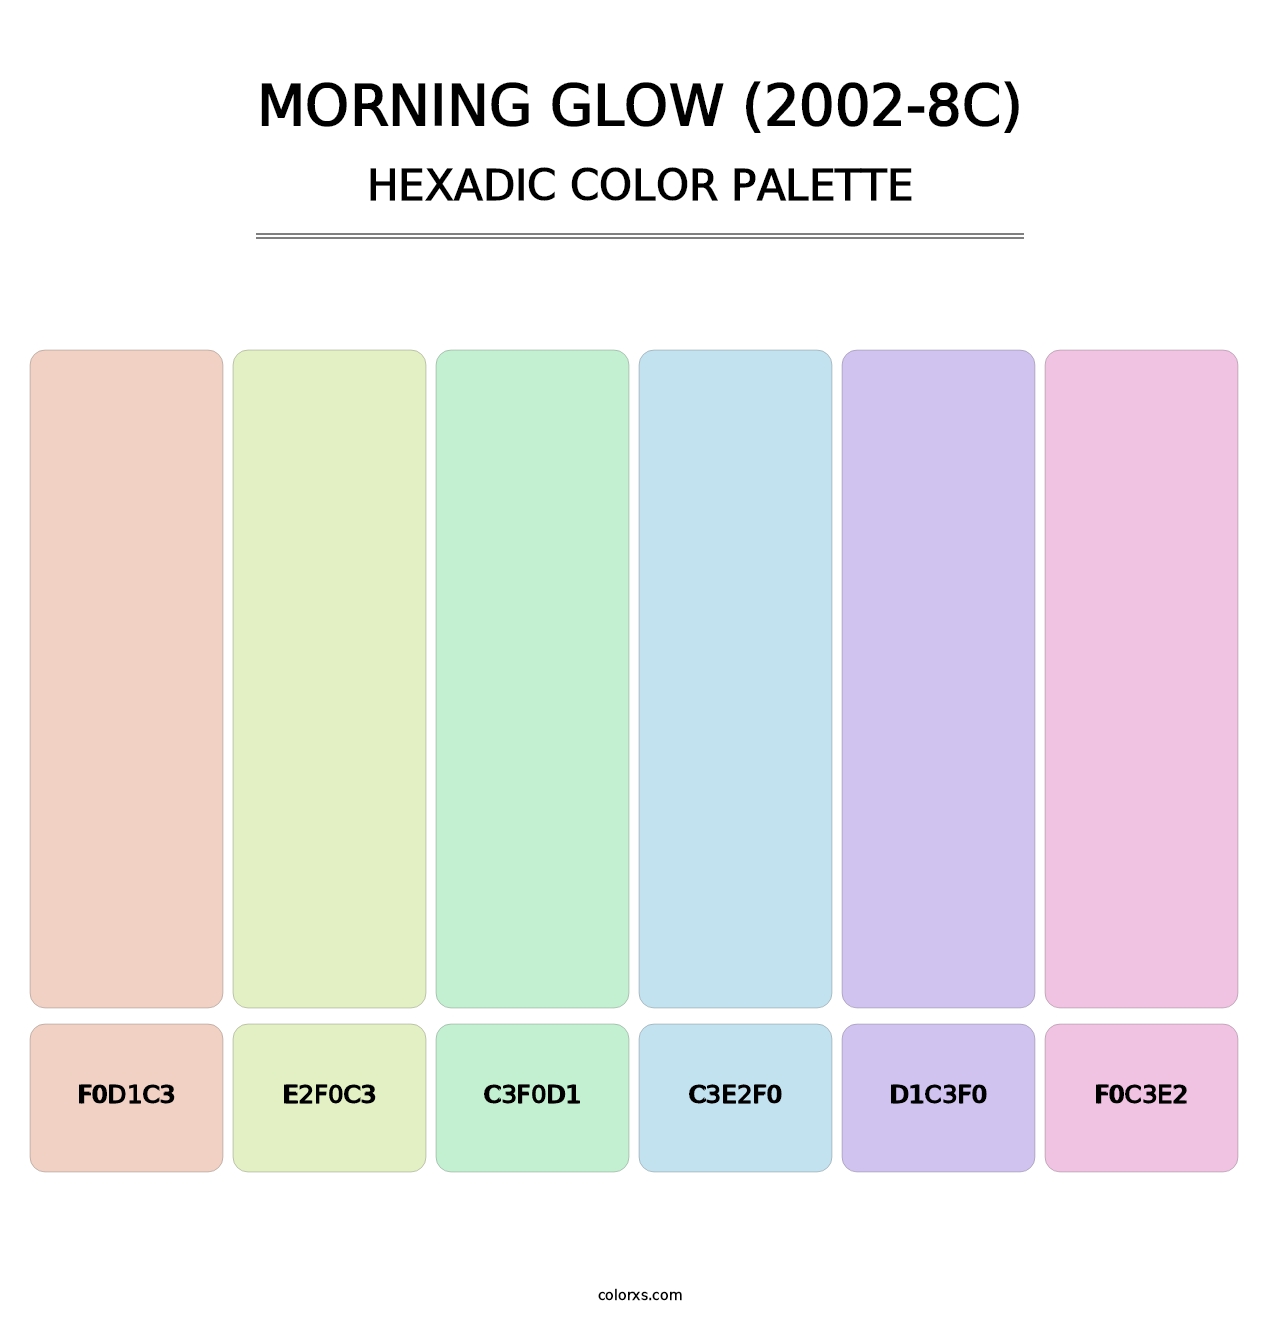 Morning Glow (2002-8C) - Hexadic Color Palette